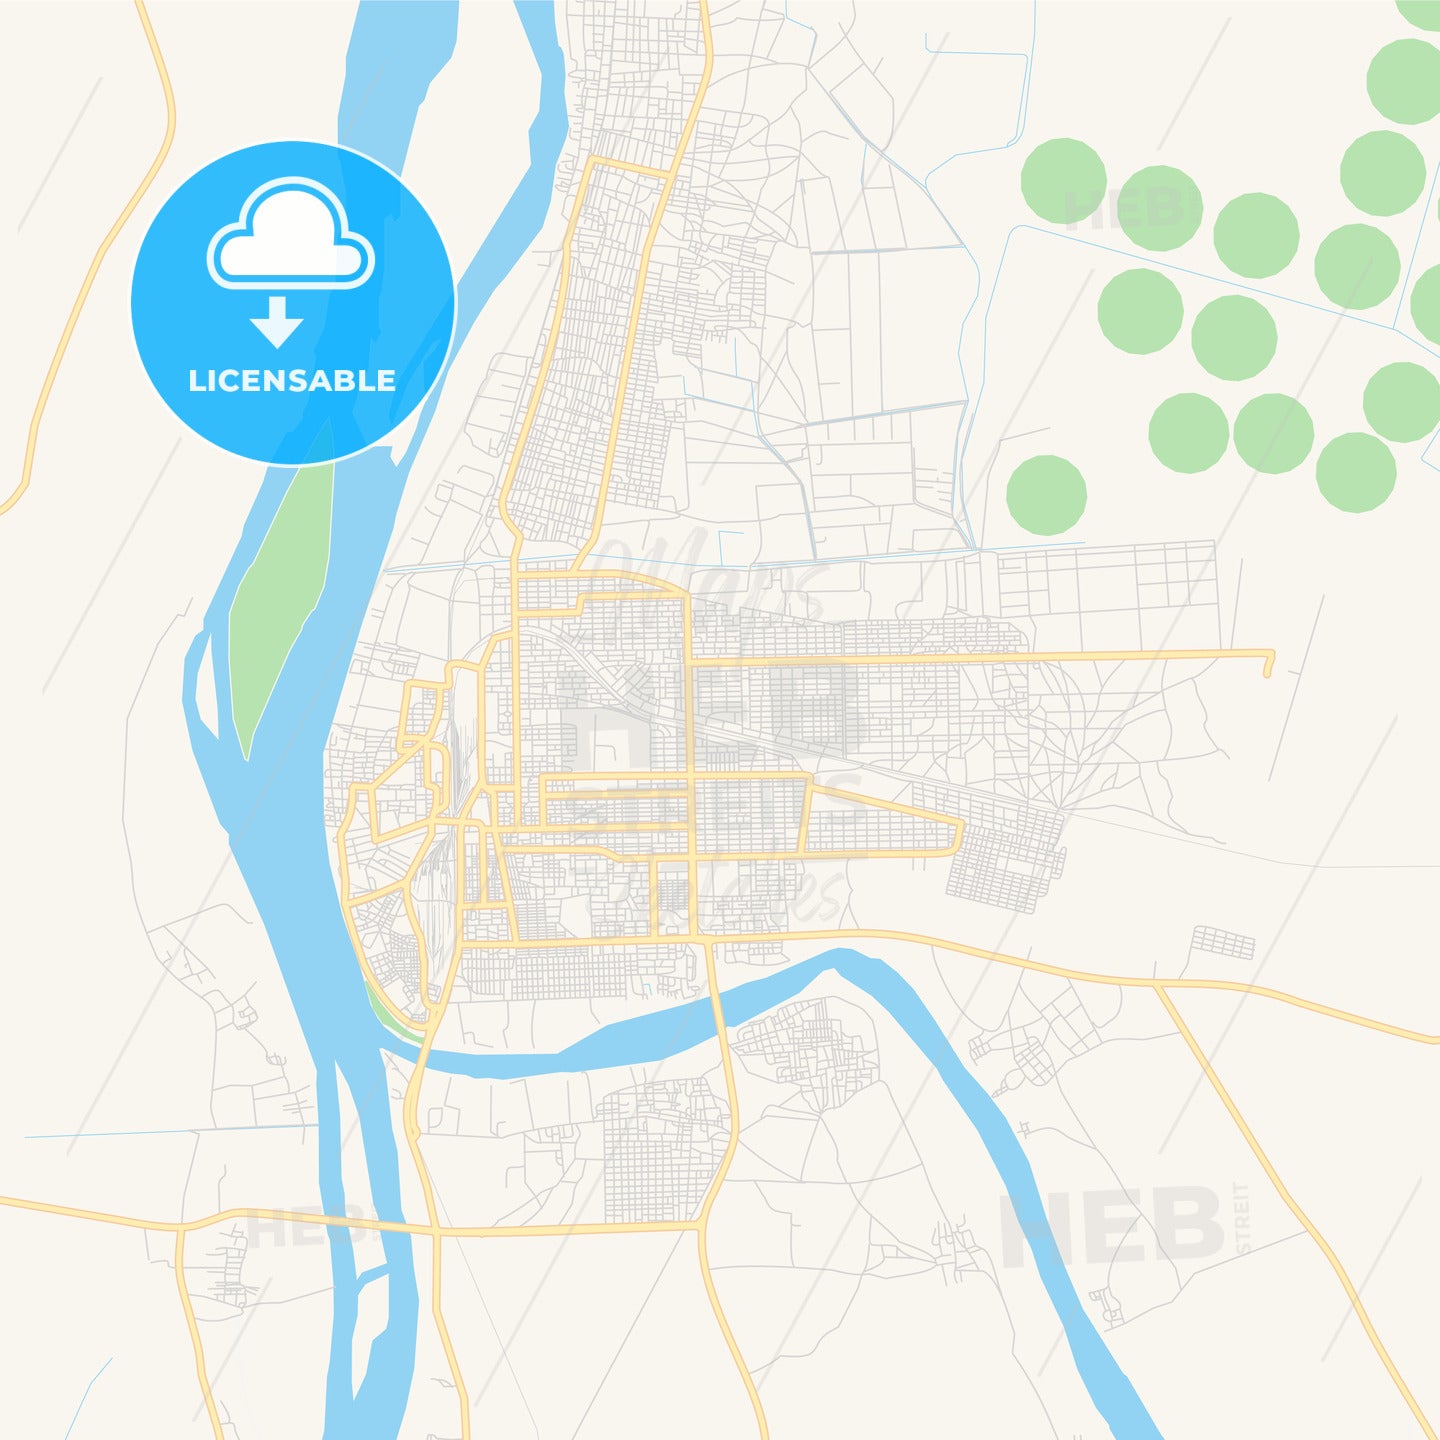 Printable street map of Atbara, Sudan